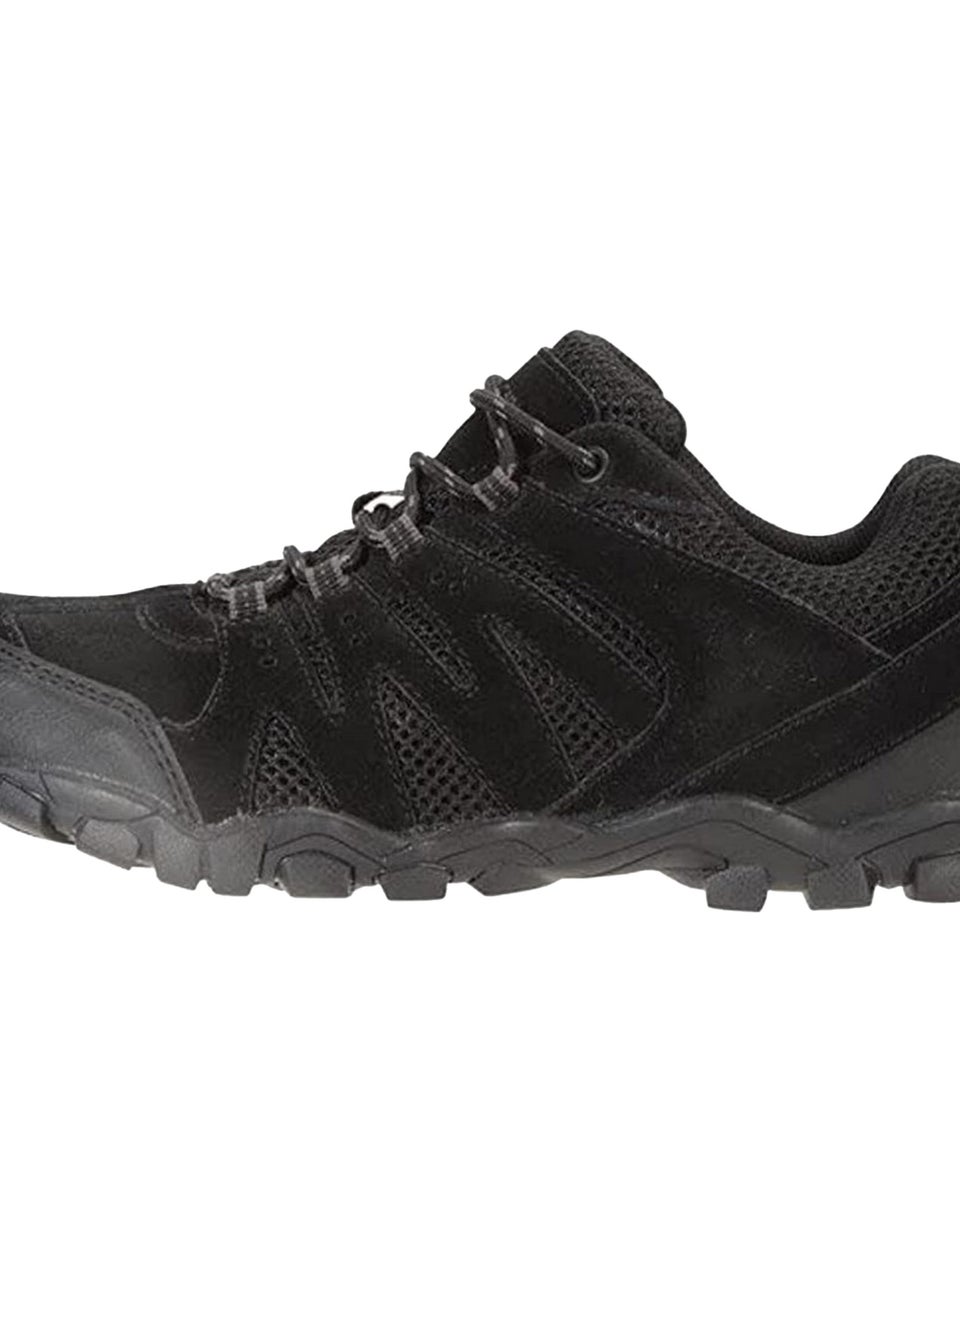 Mountain Warehouse Black Suede Outdoor Walking Shoes